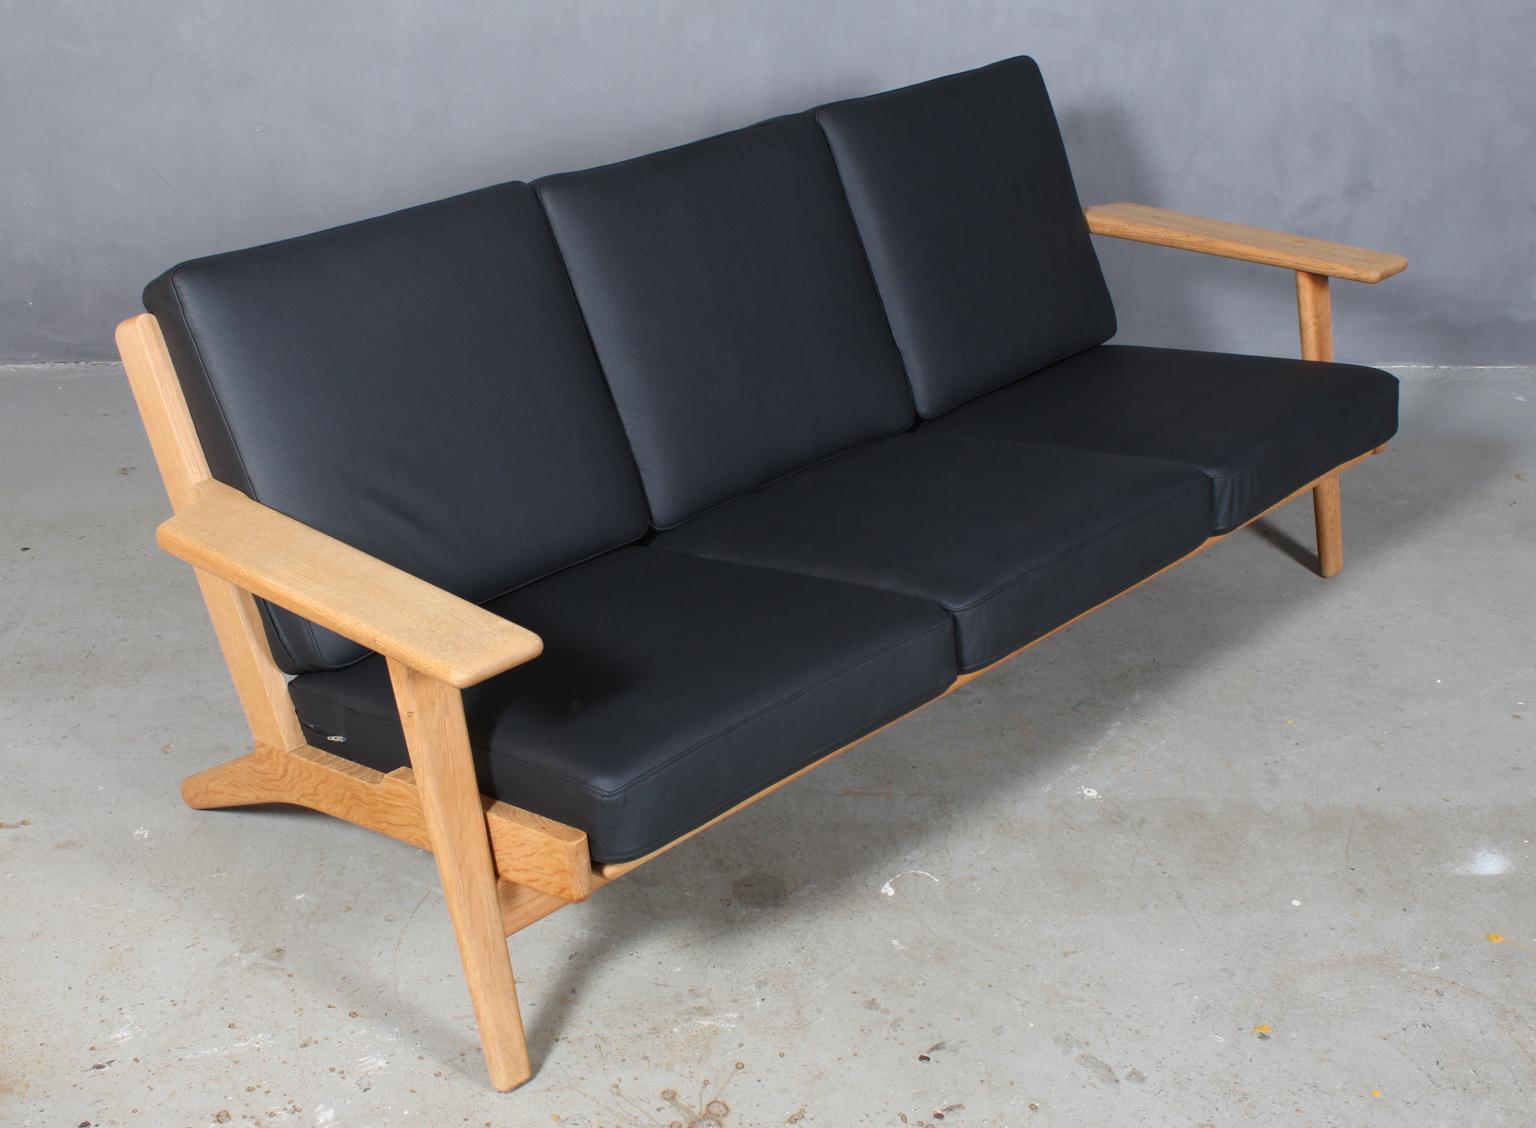 Hans J. Wegner three-seat sofa new upholstered with black leather, foam cushions.

Frame in soap treated oak.

Model 290/3, made by GETAMA.